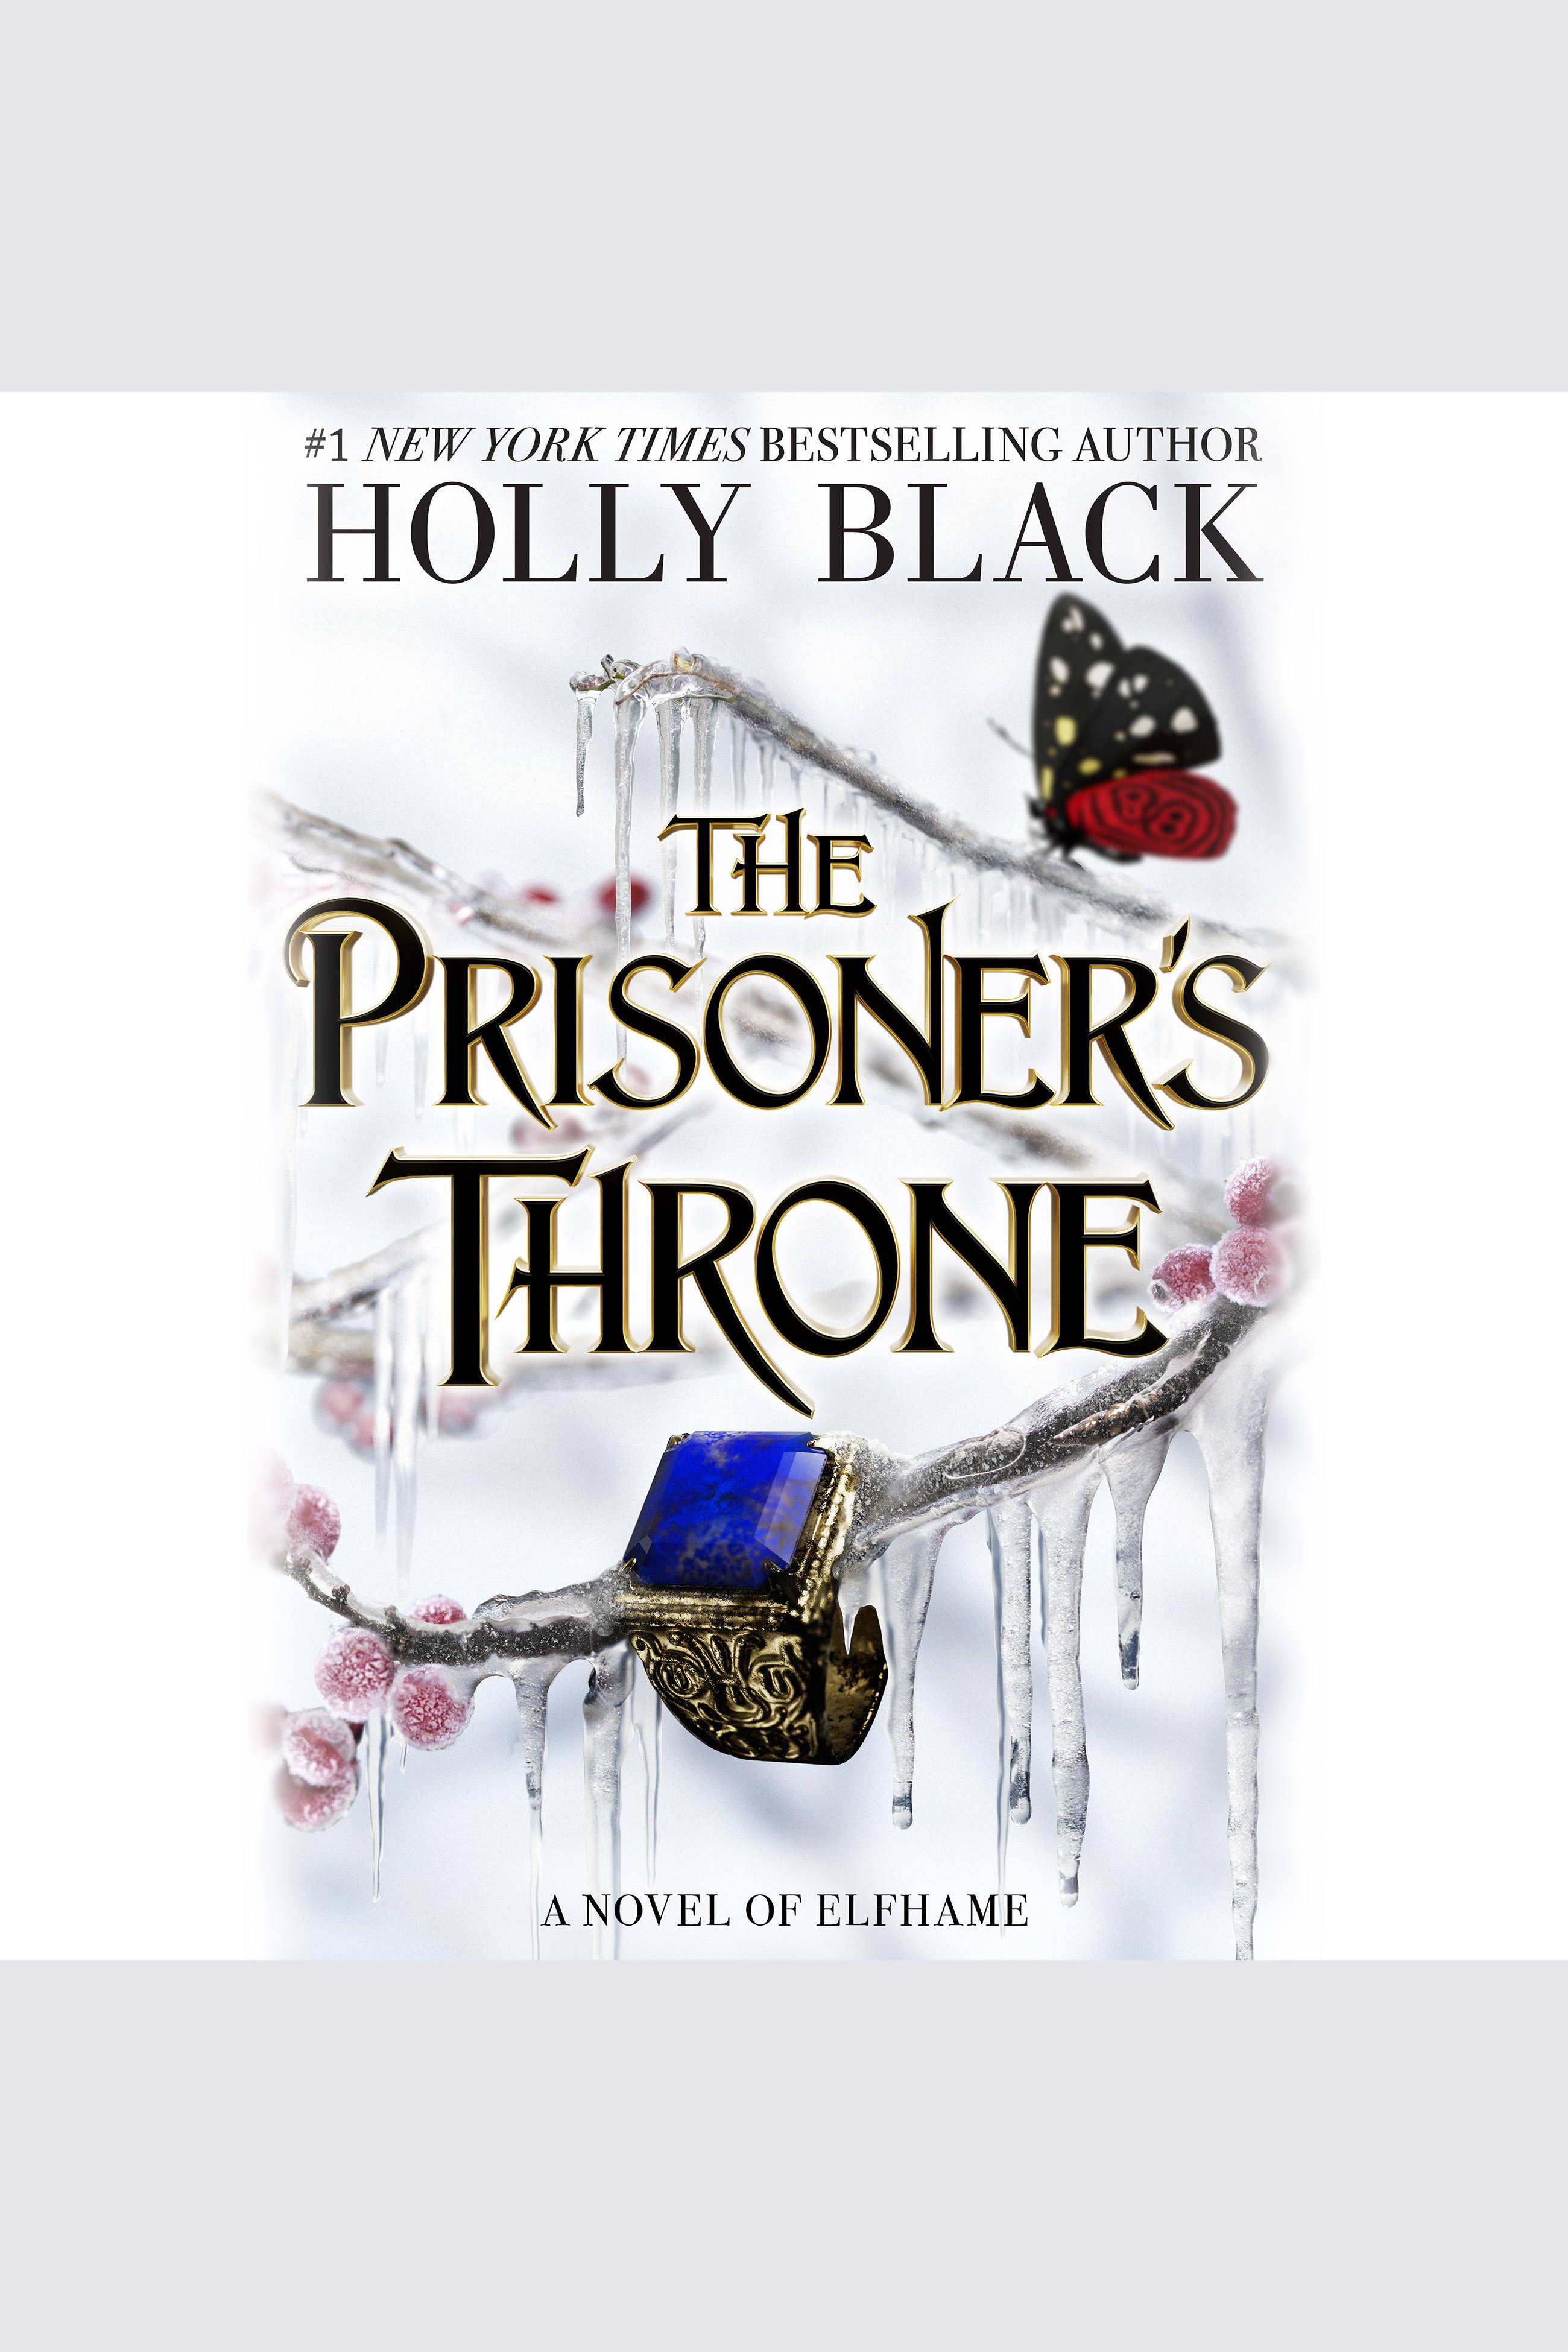 The Prisoner's Throne cover image